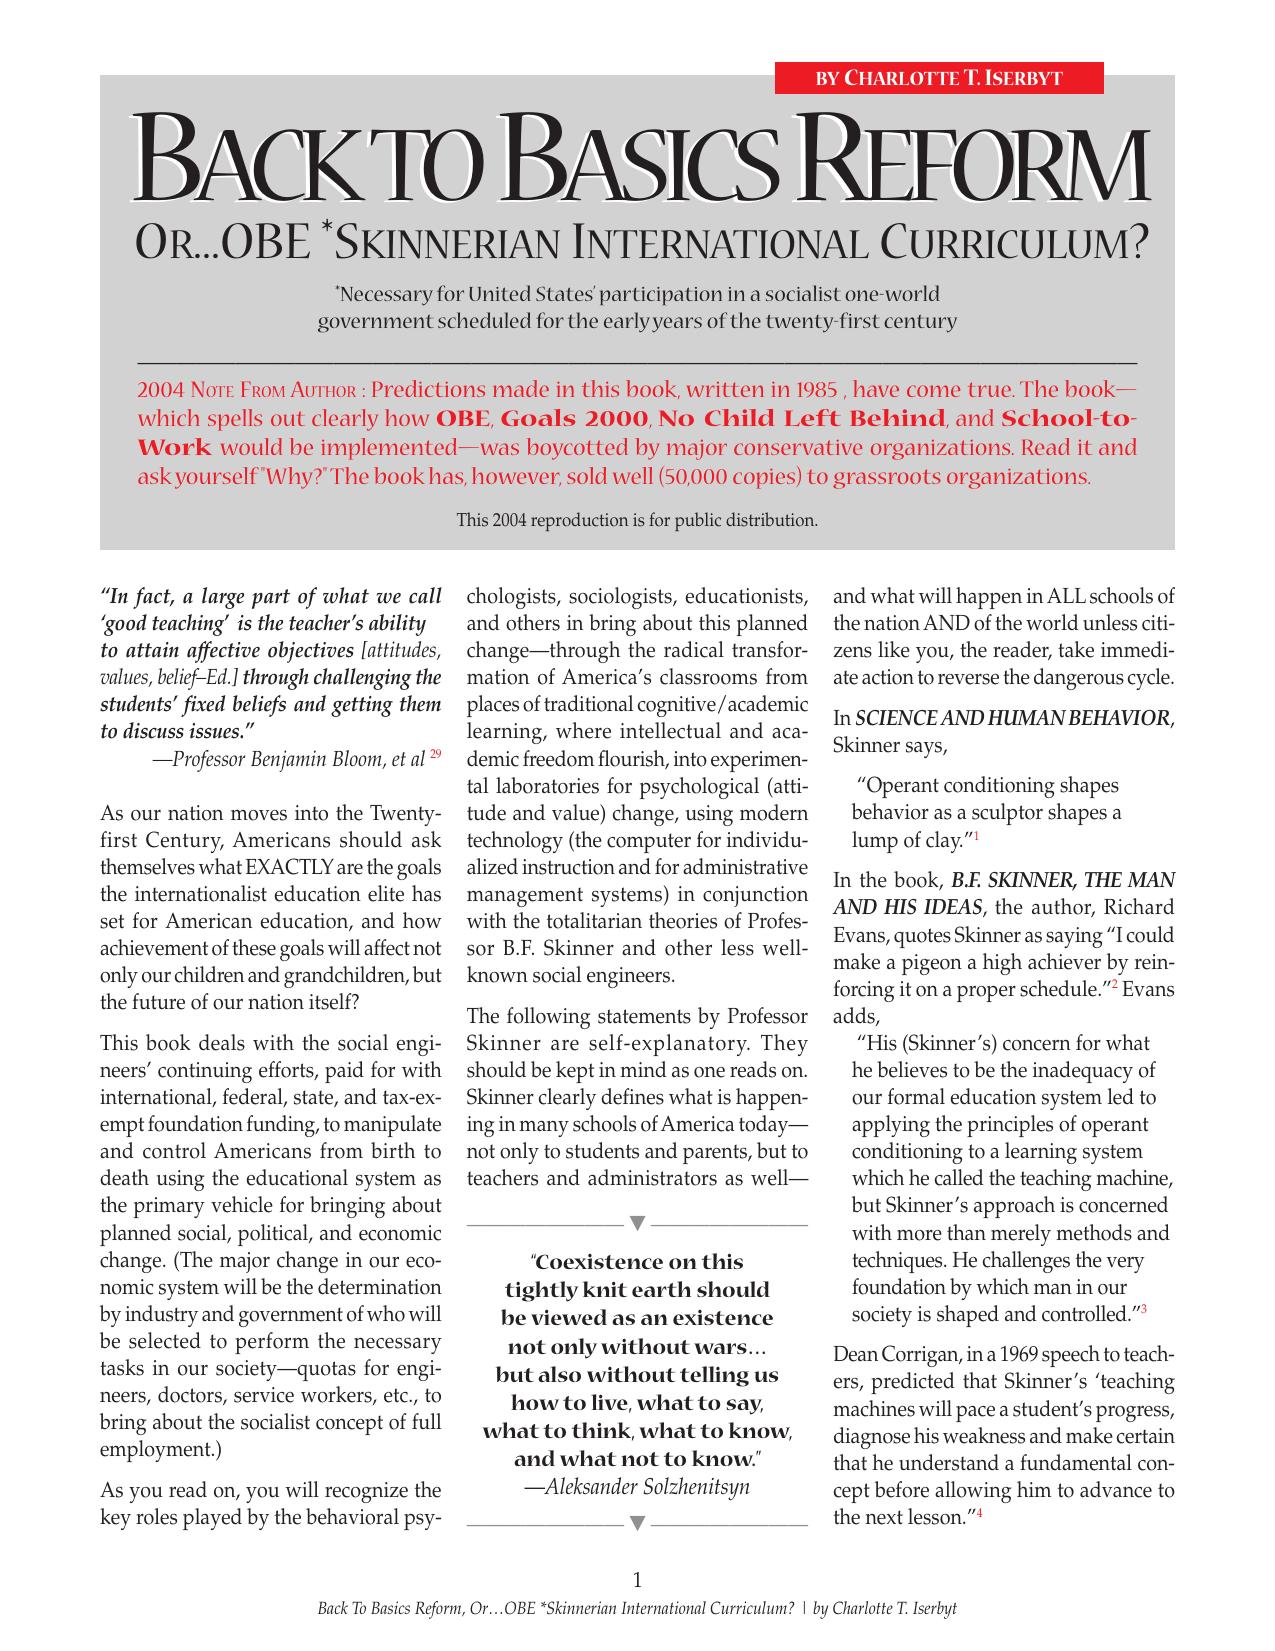 Back to Basics Reform or OBE (Skinnerian International Curriculum?)